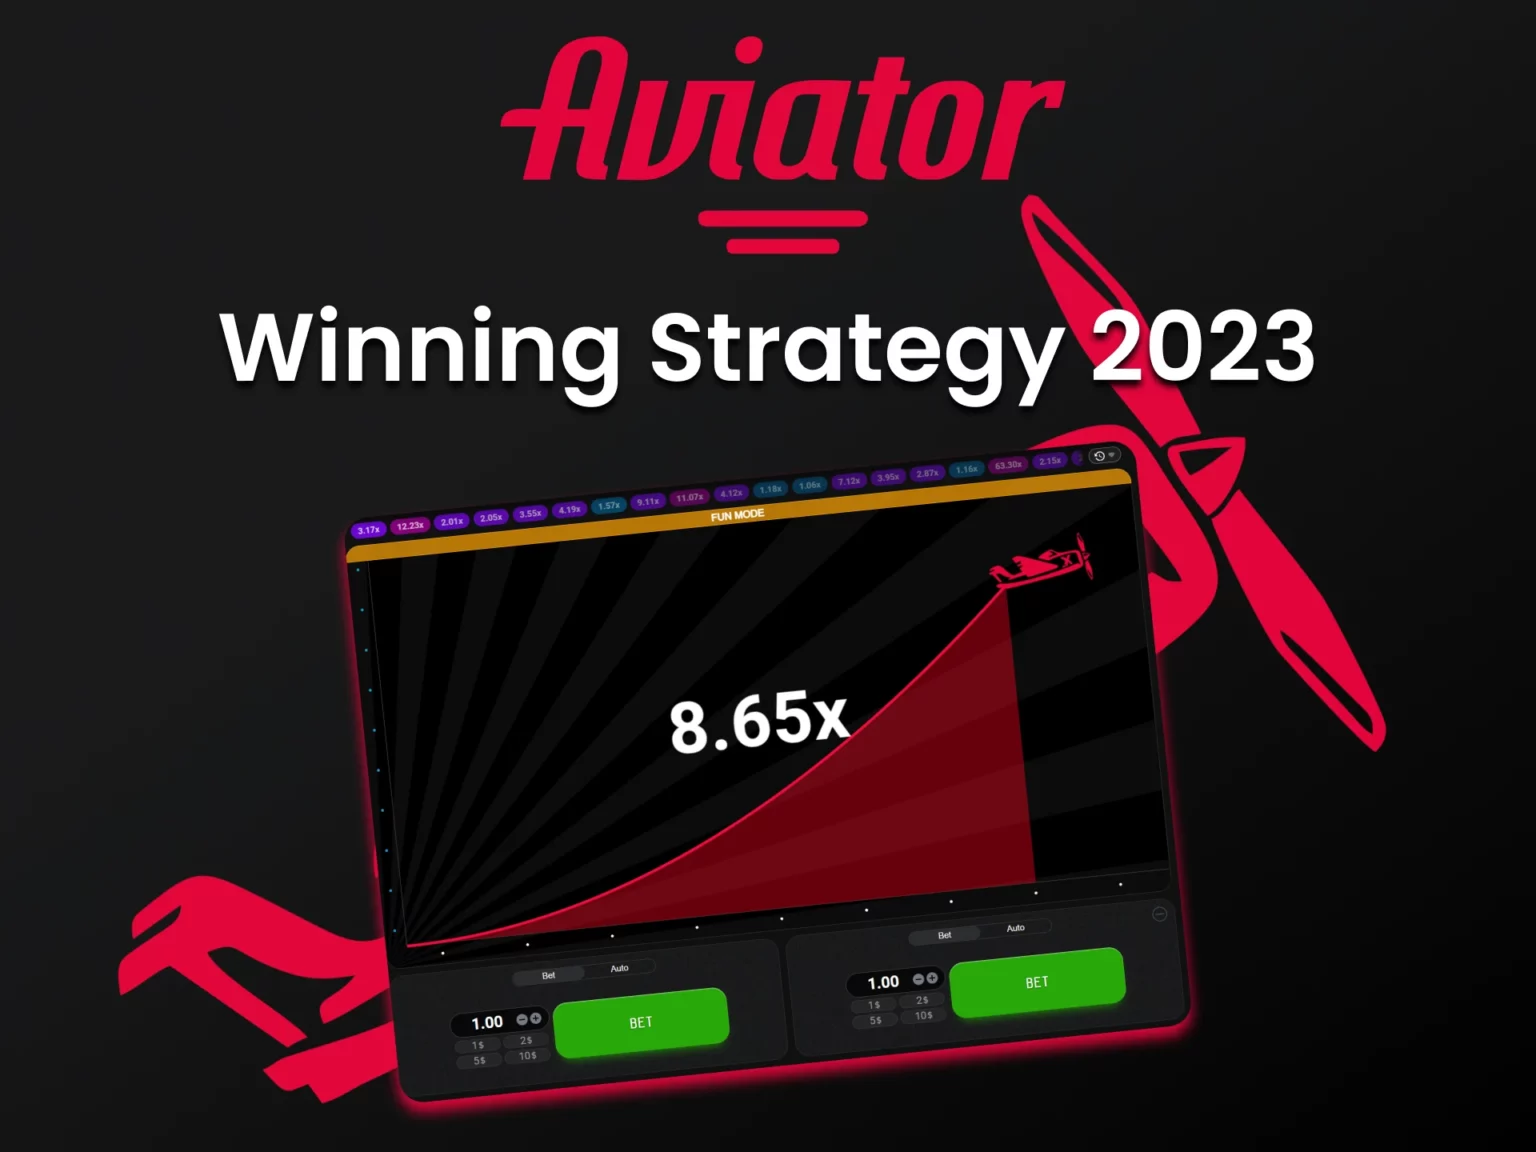 Aviator Winning Strategy 2023